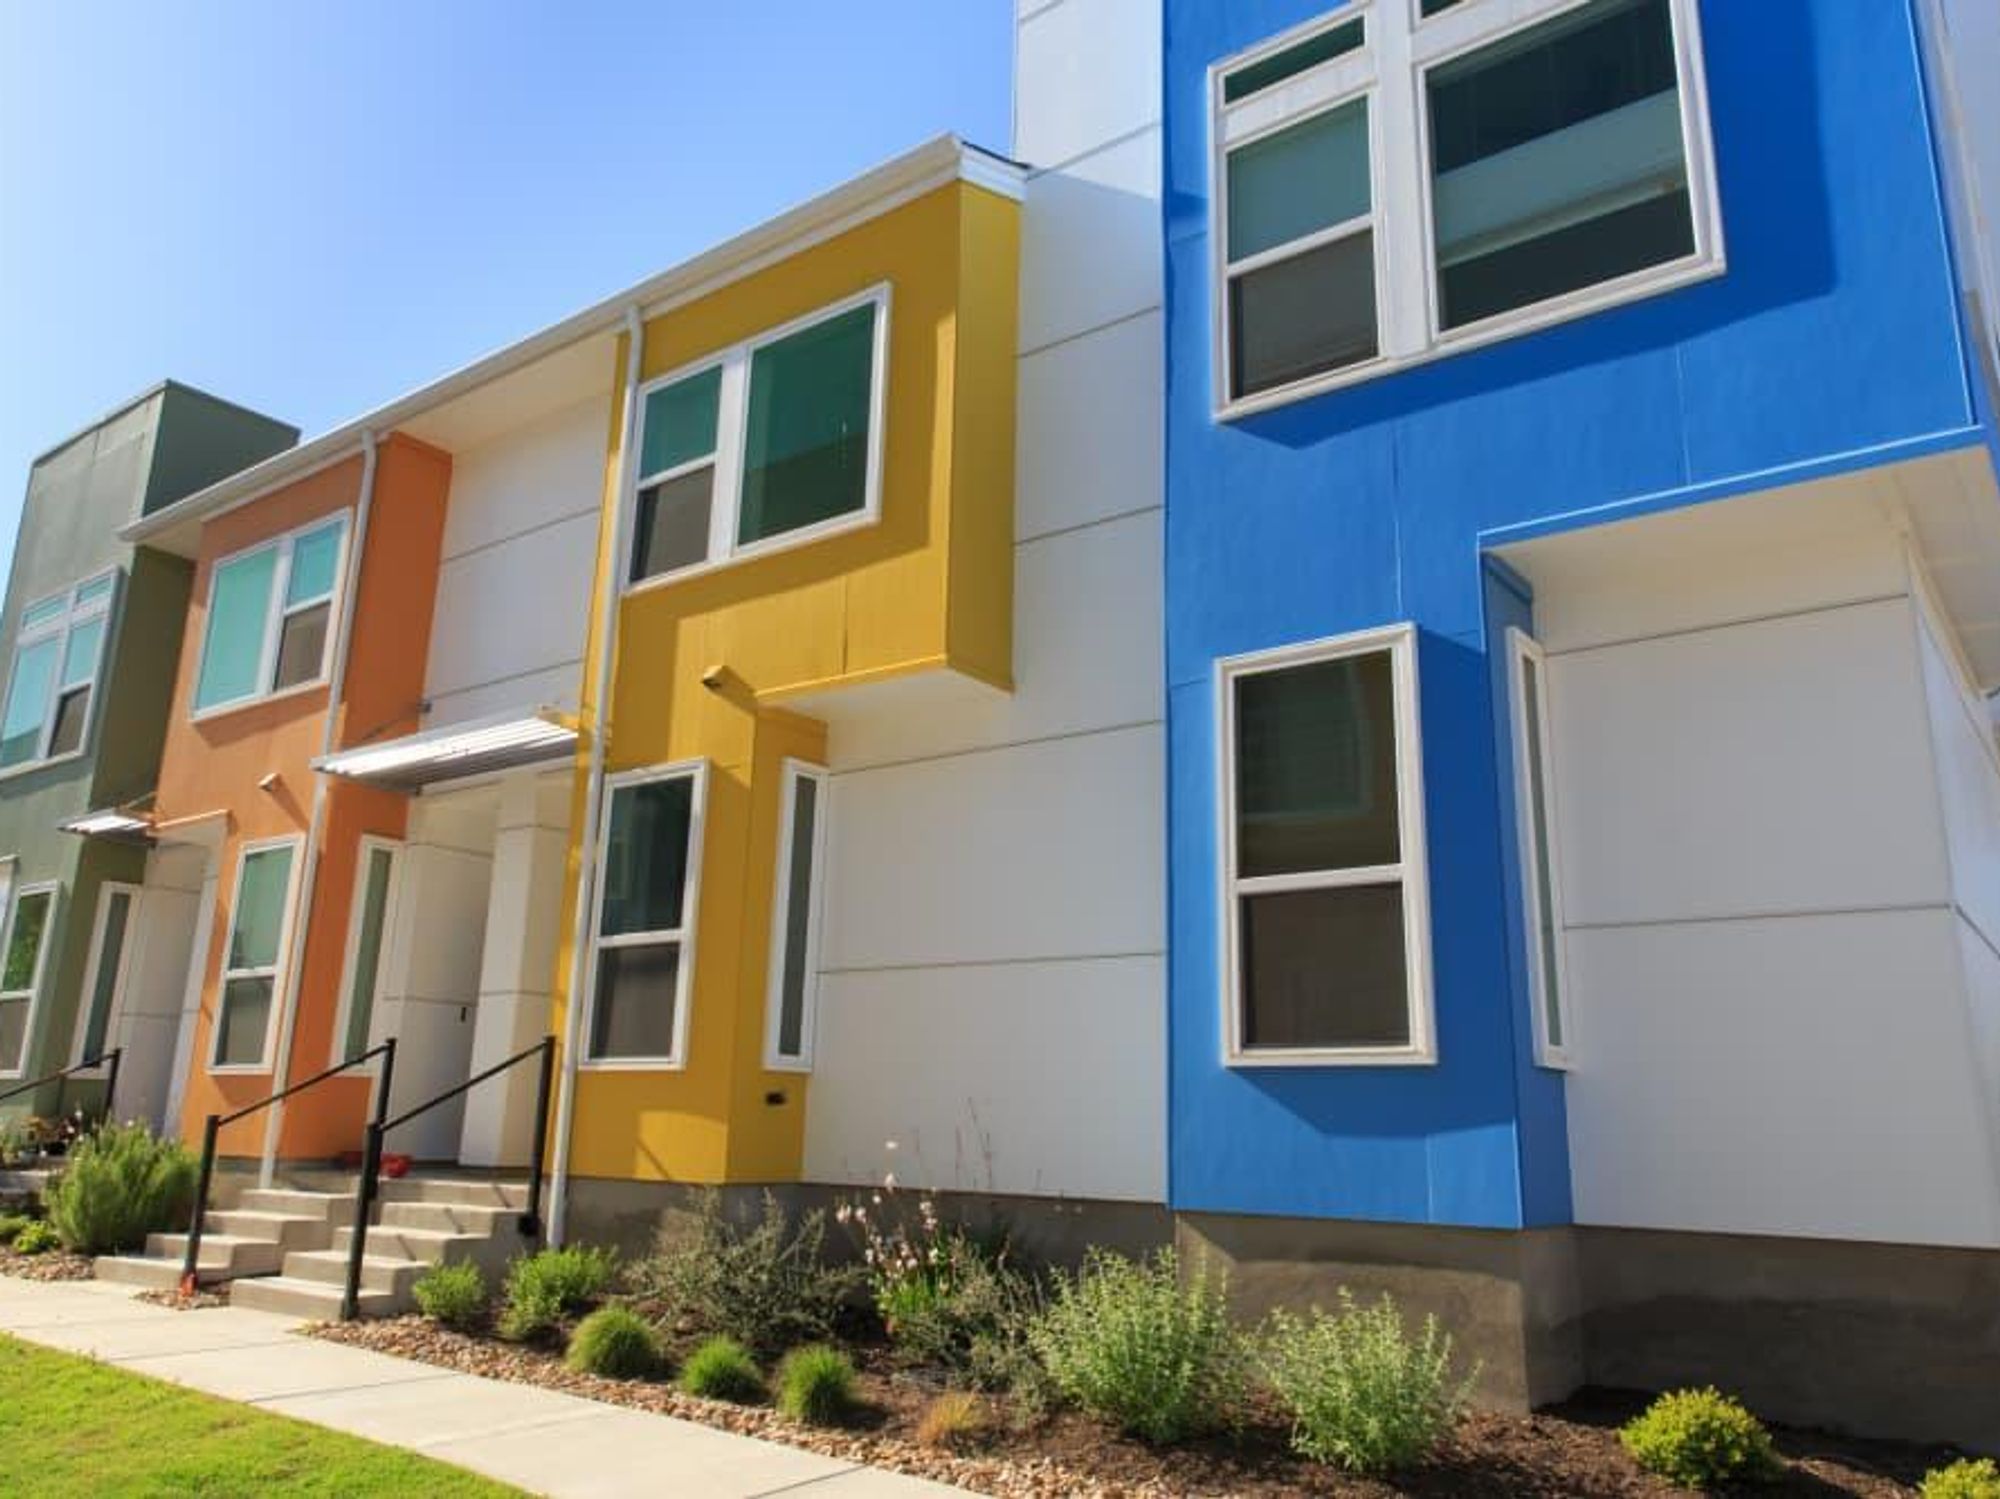 colorful homes in new Austin neigbhorhood